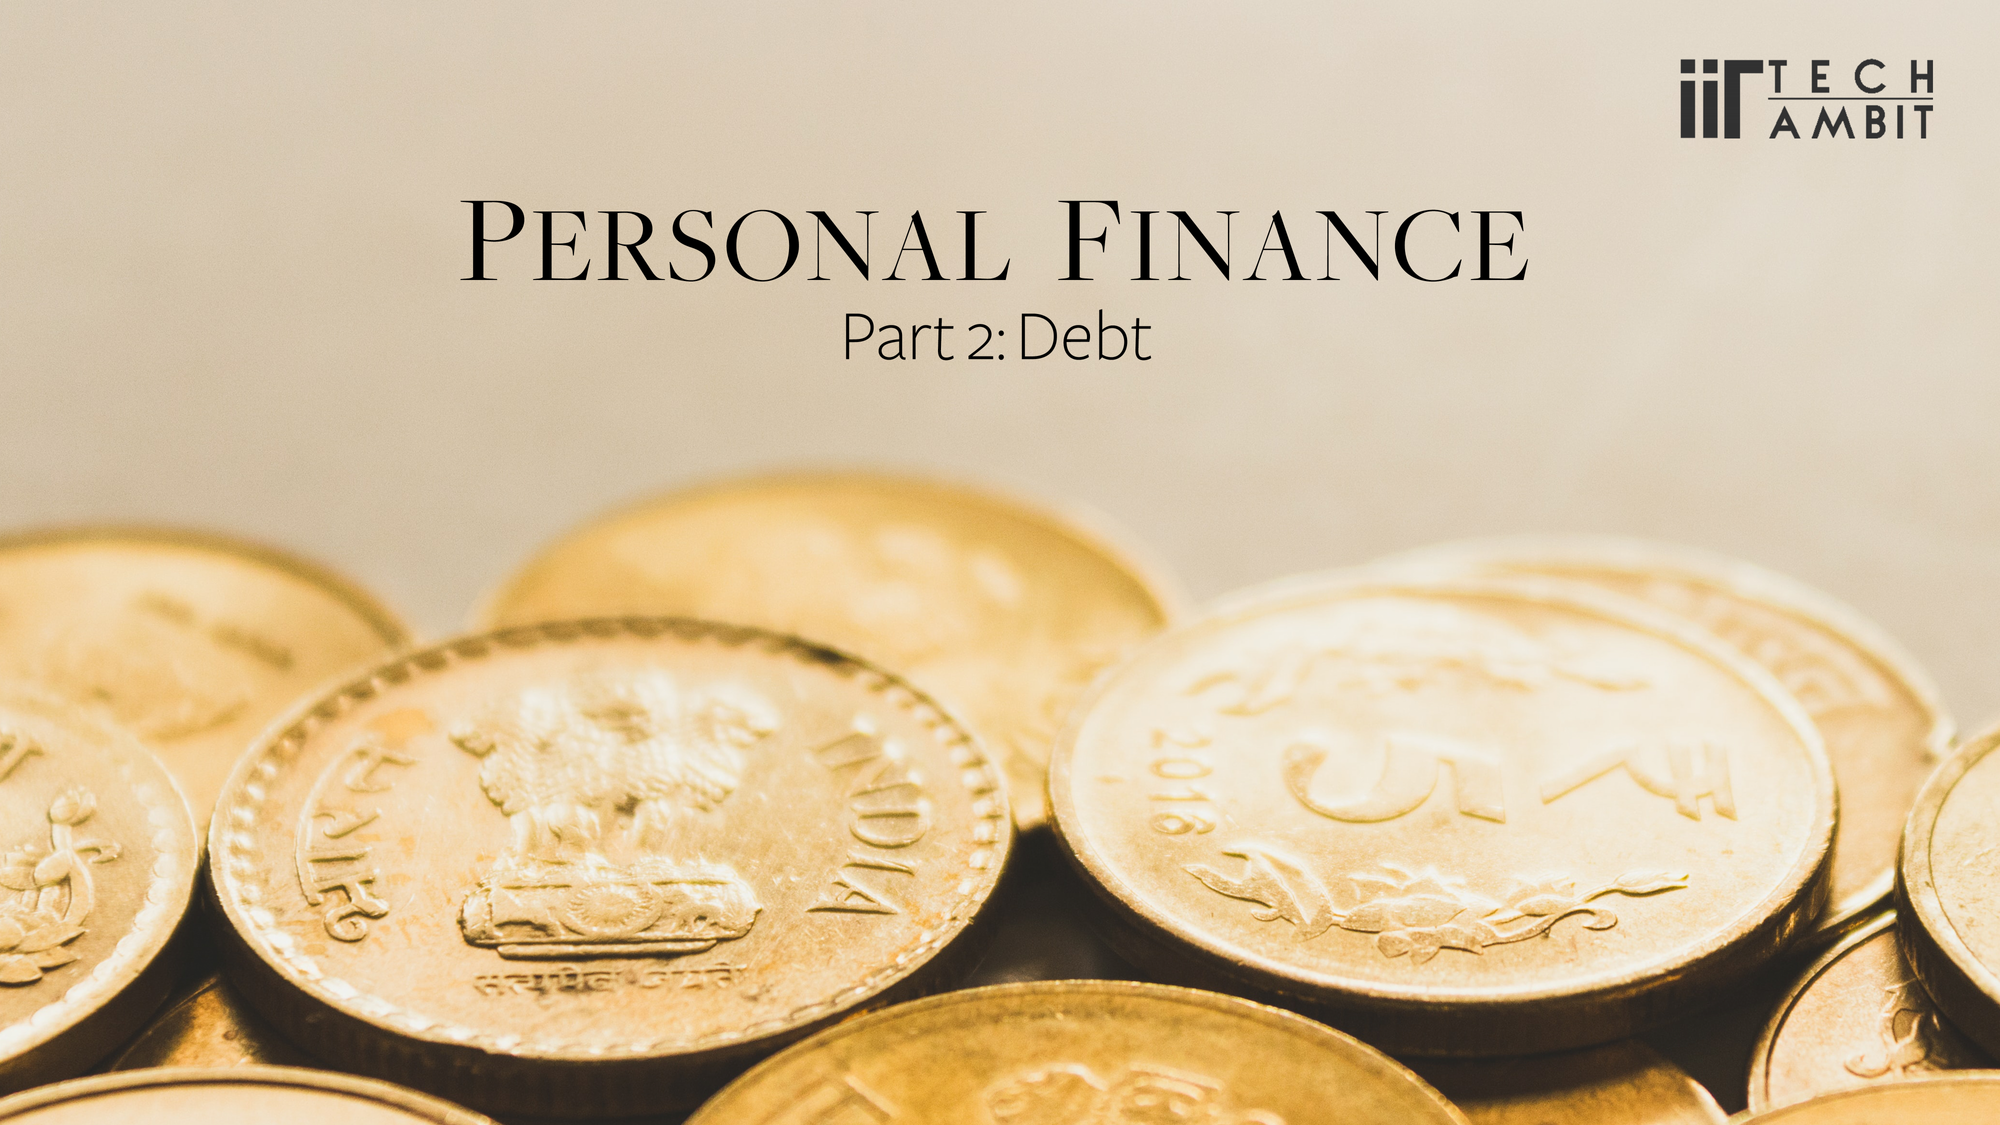 Personal finance - Part 2 Debt